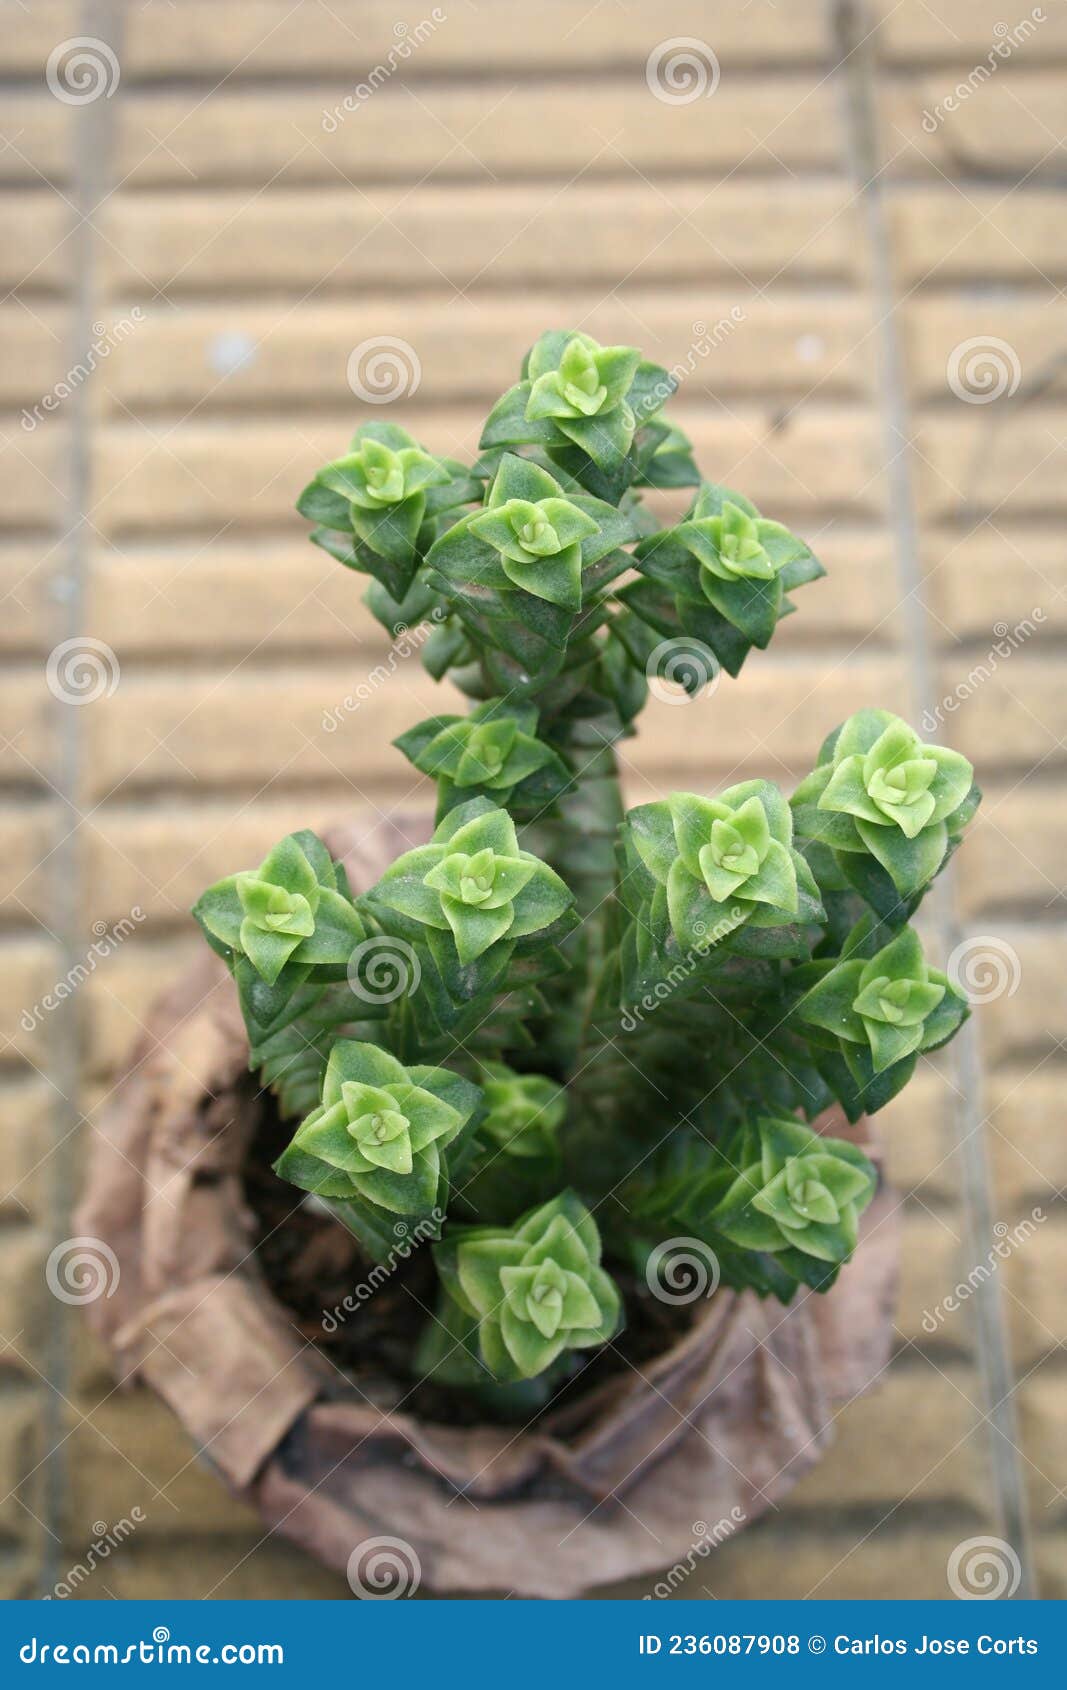 succulent crÃÂ sula perforata in the  of stars with green rosettes in its pot